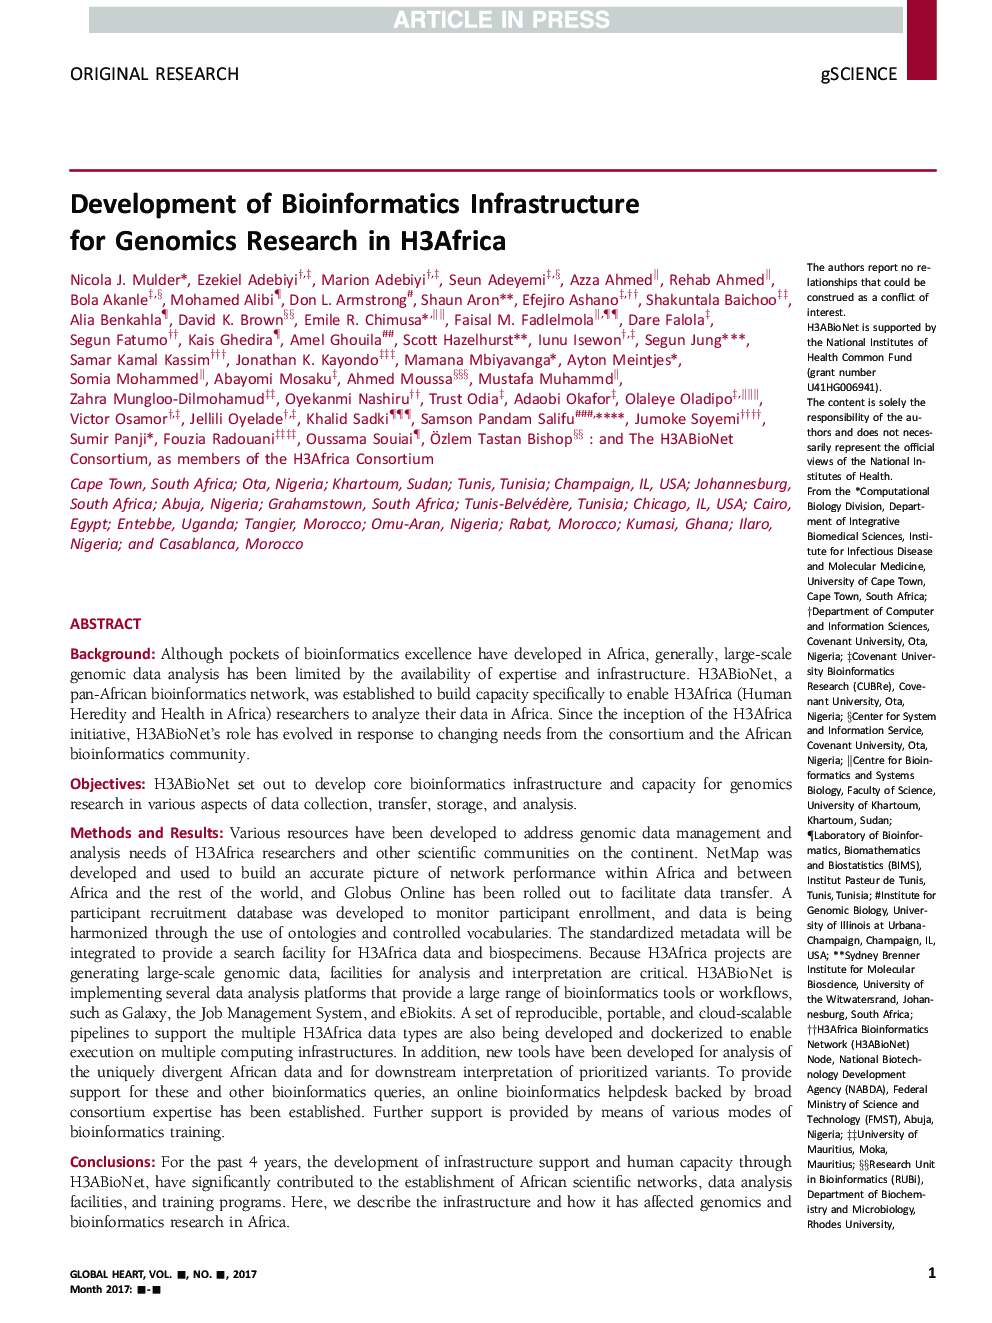 Development of Bioinformatics Infrastructure for Genomics Research